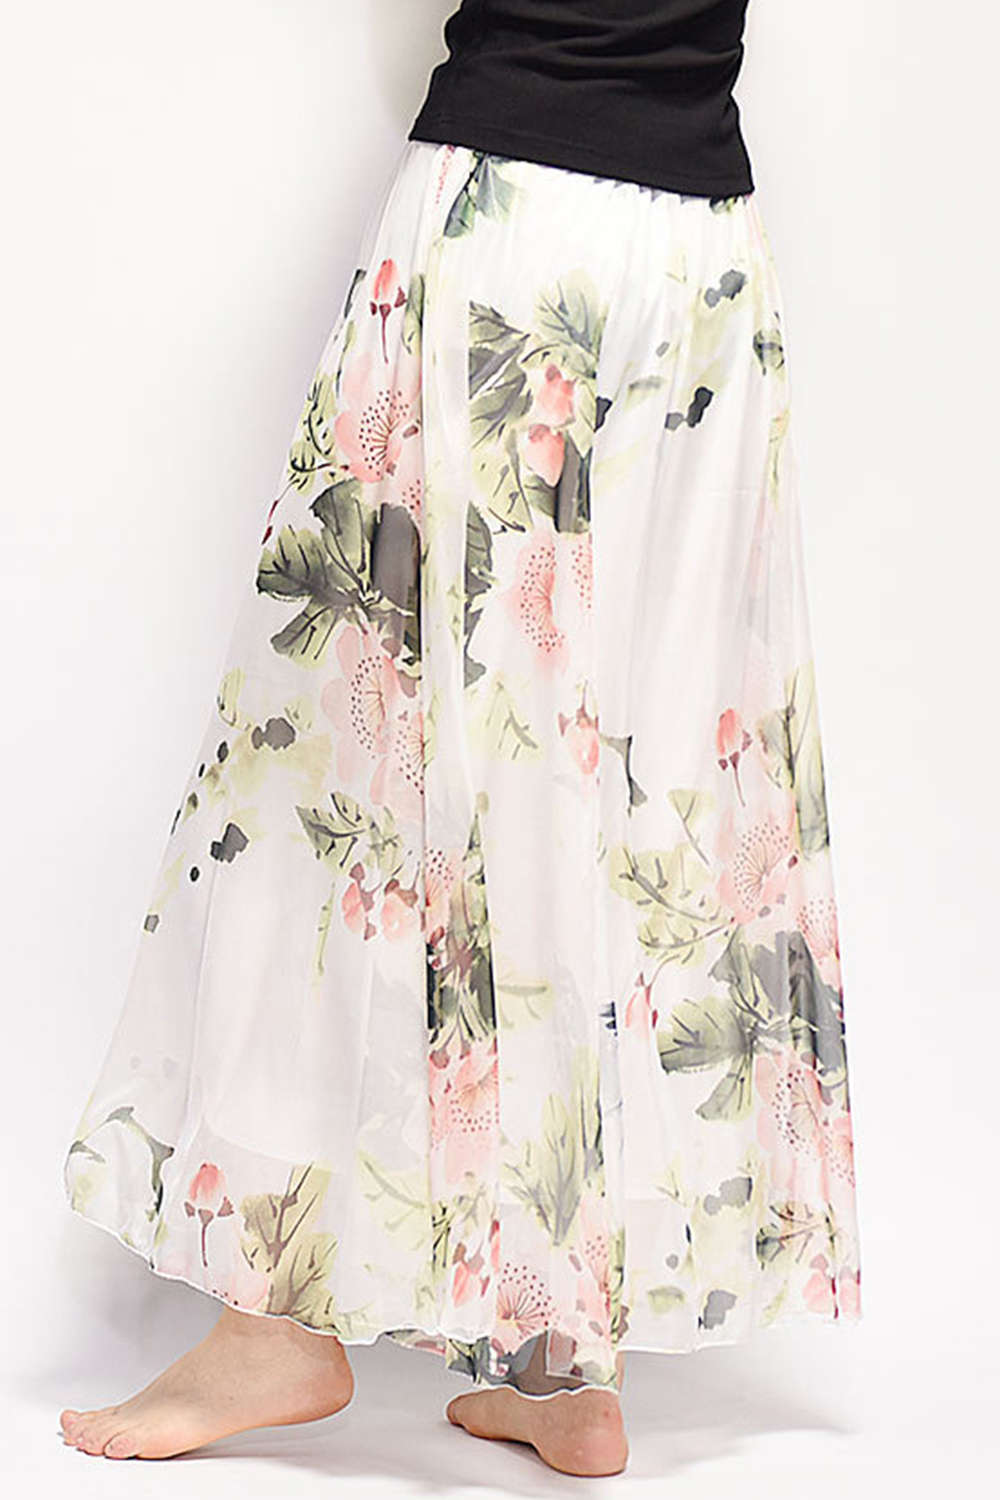  Iyasson Floral Printing Boho Style Maxi Skirt